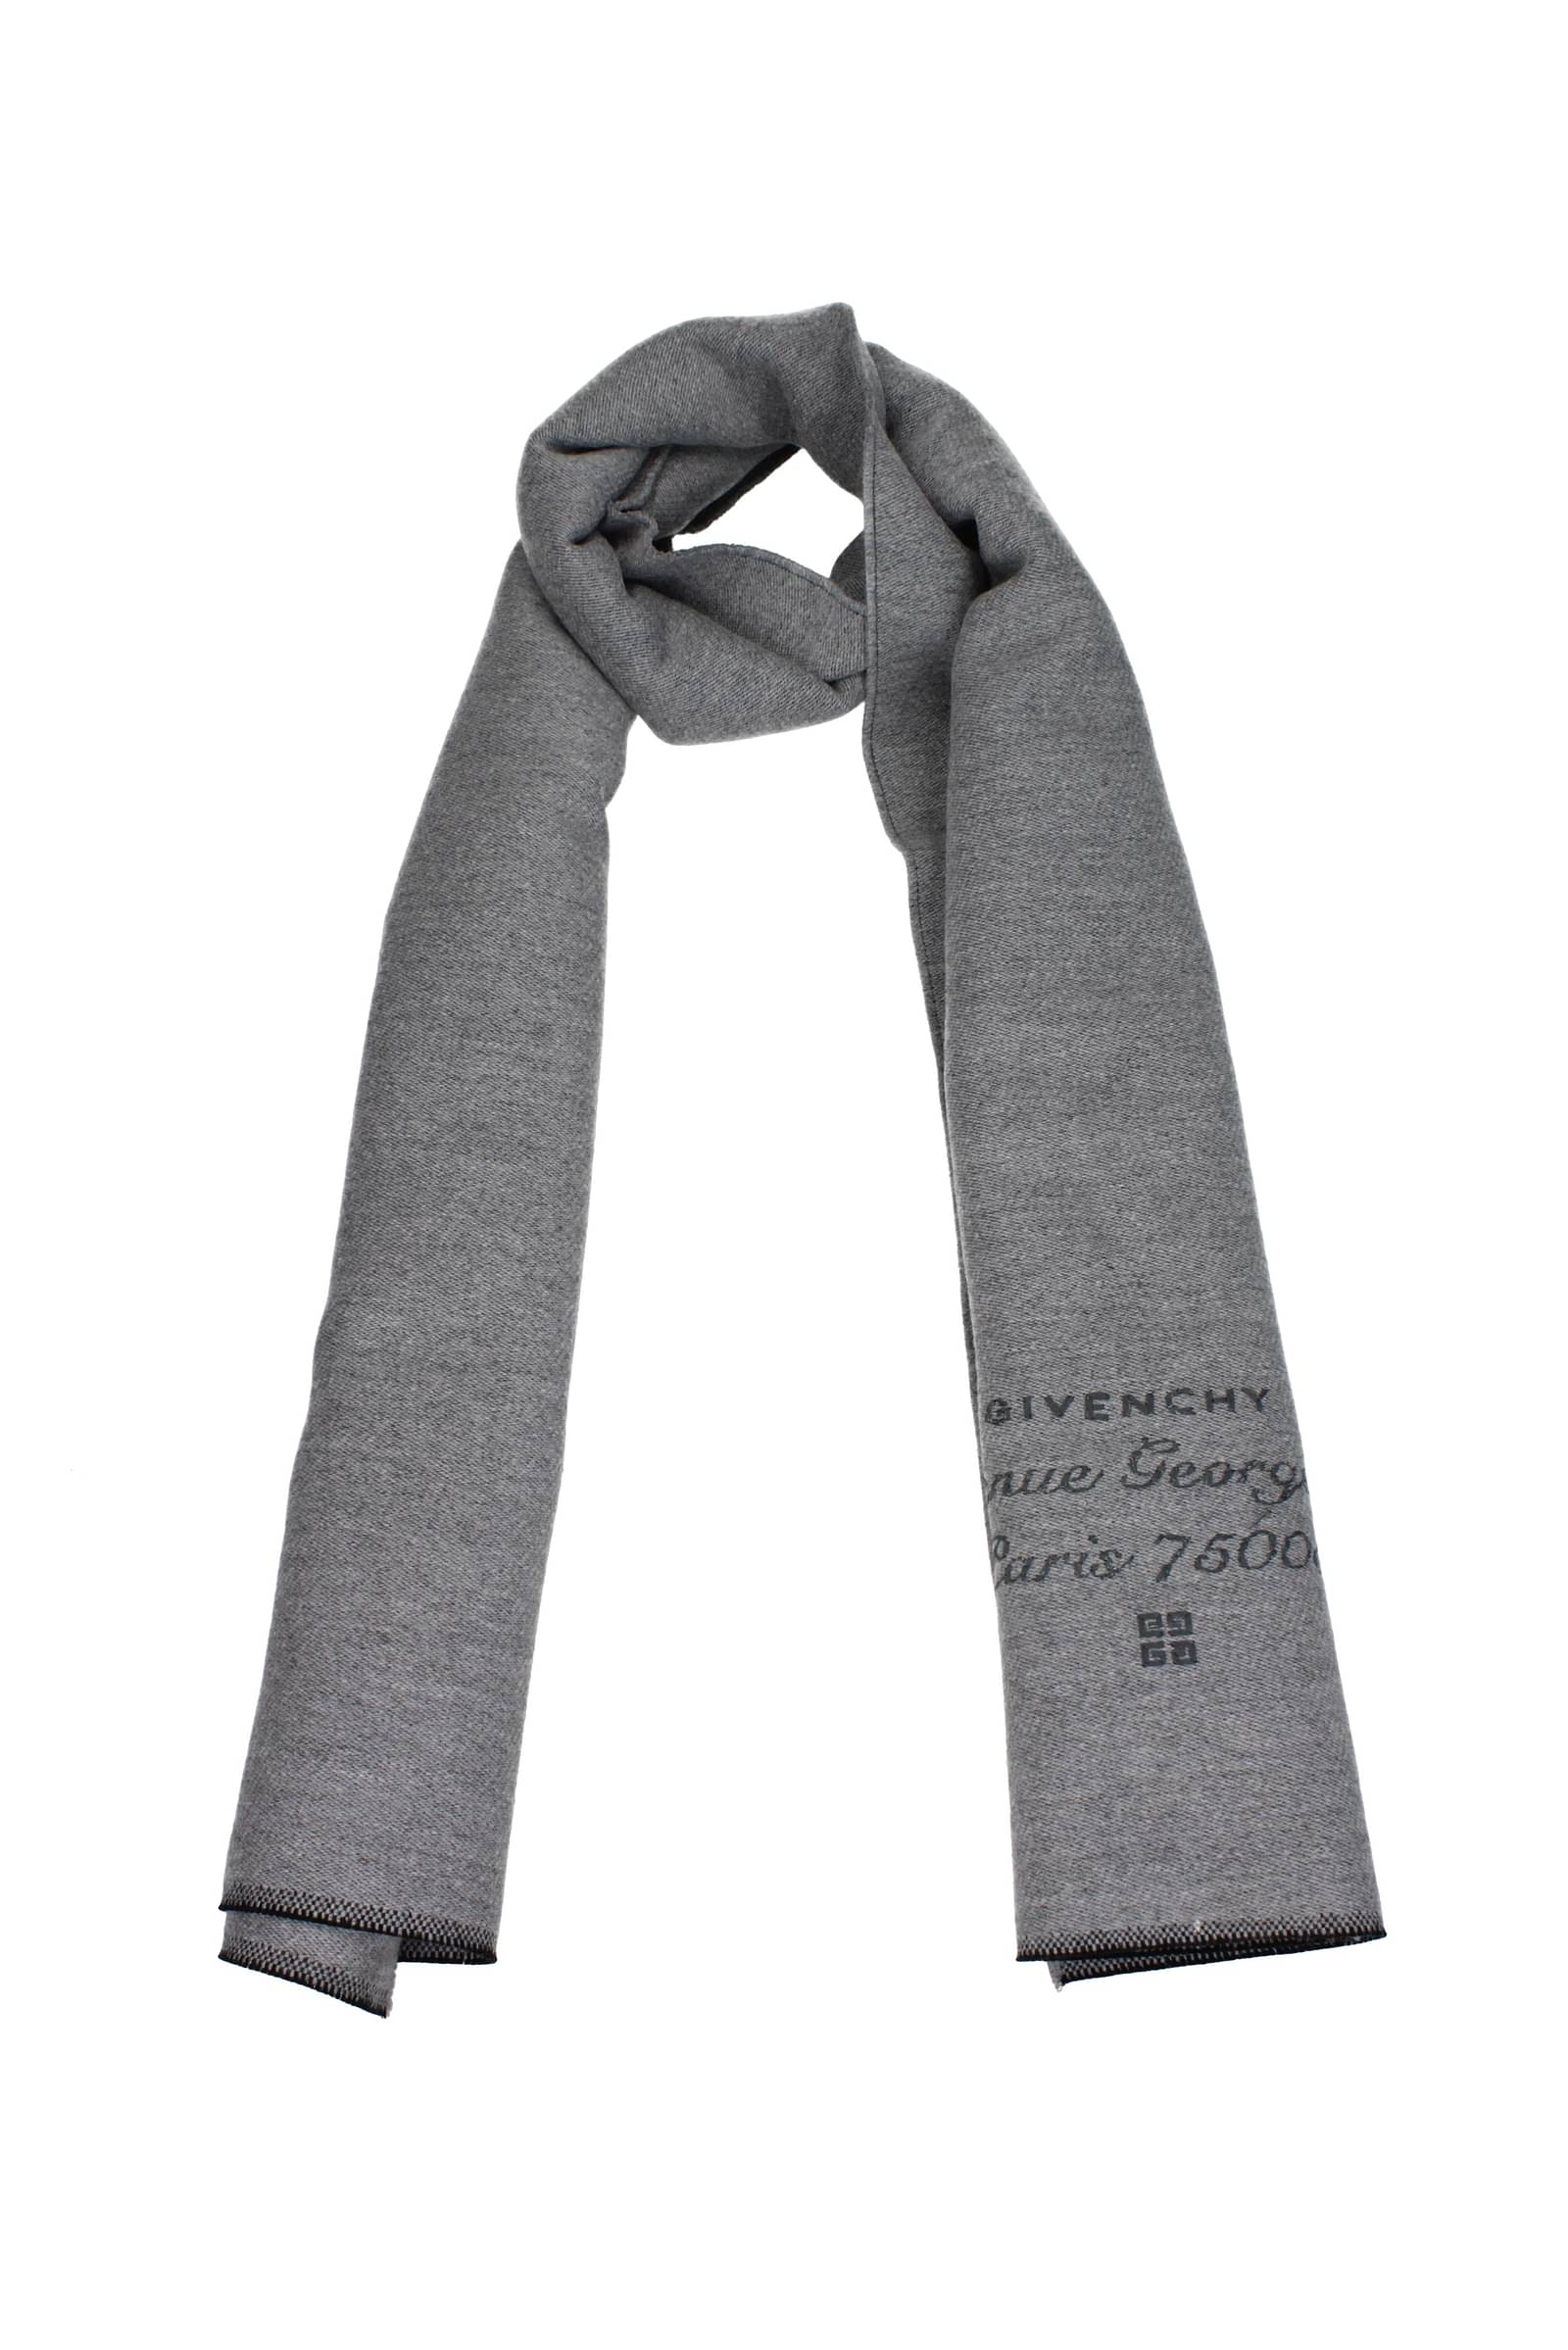 Givenchy スカーフ 男性 ウール 灰色 シルバー